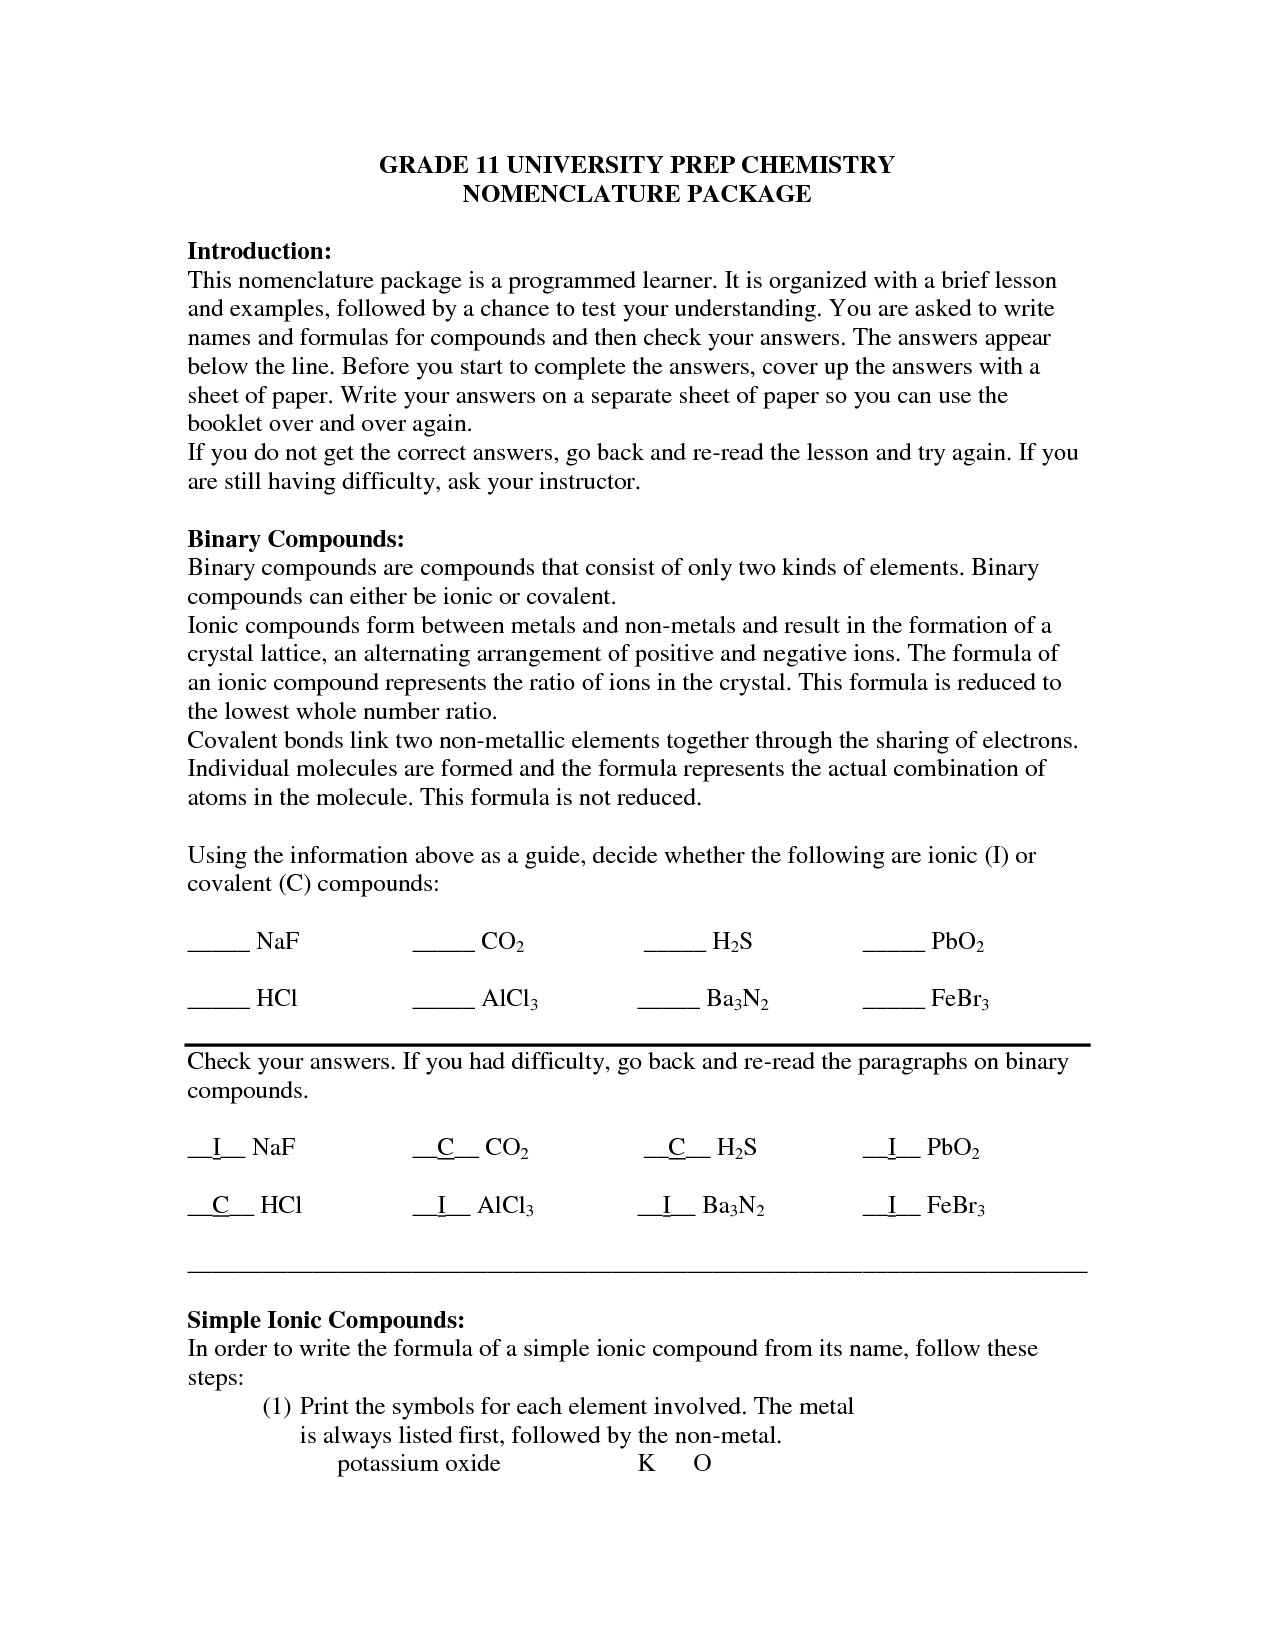 Writing Formulas Criss Cross Method Worksheet Answers Image